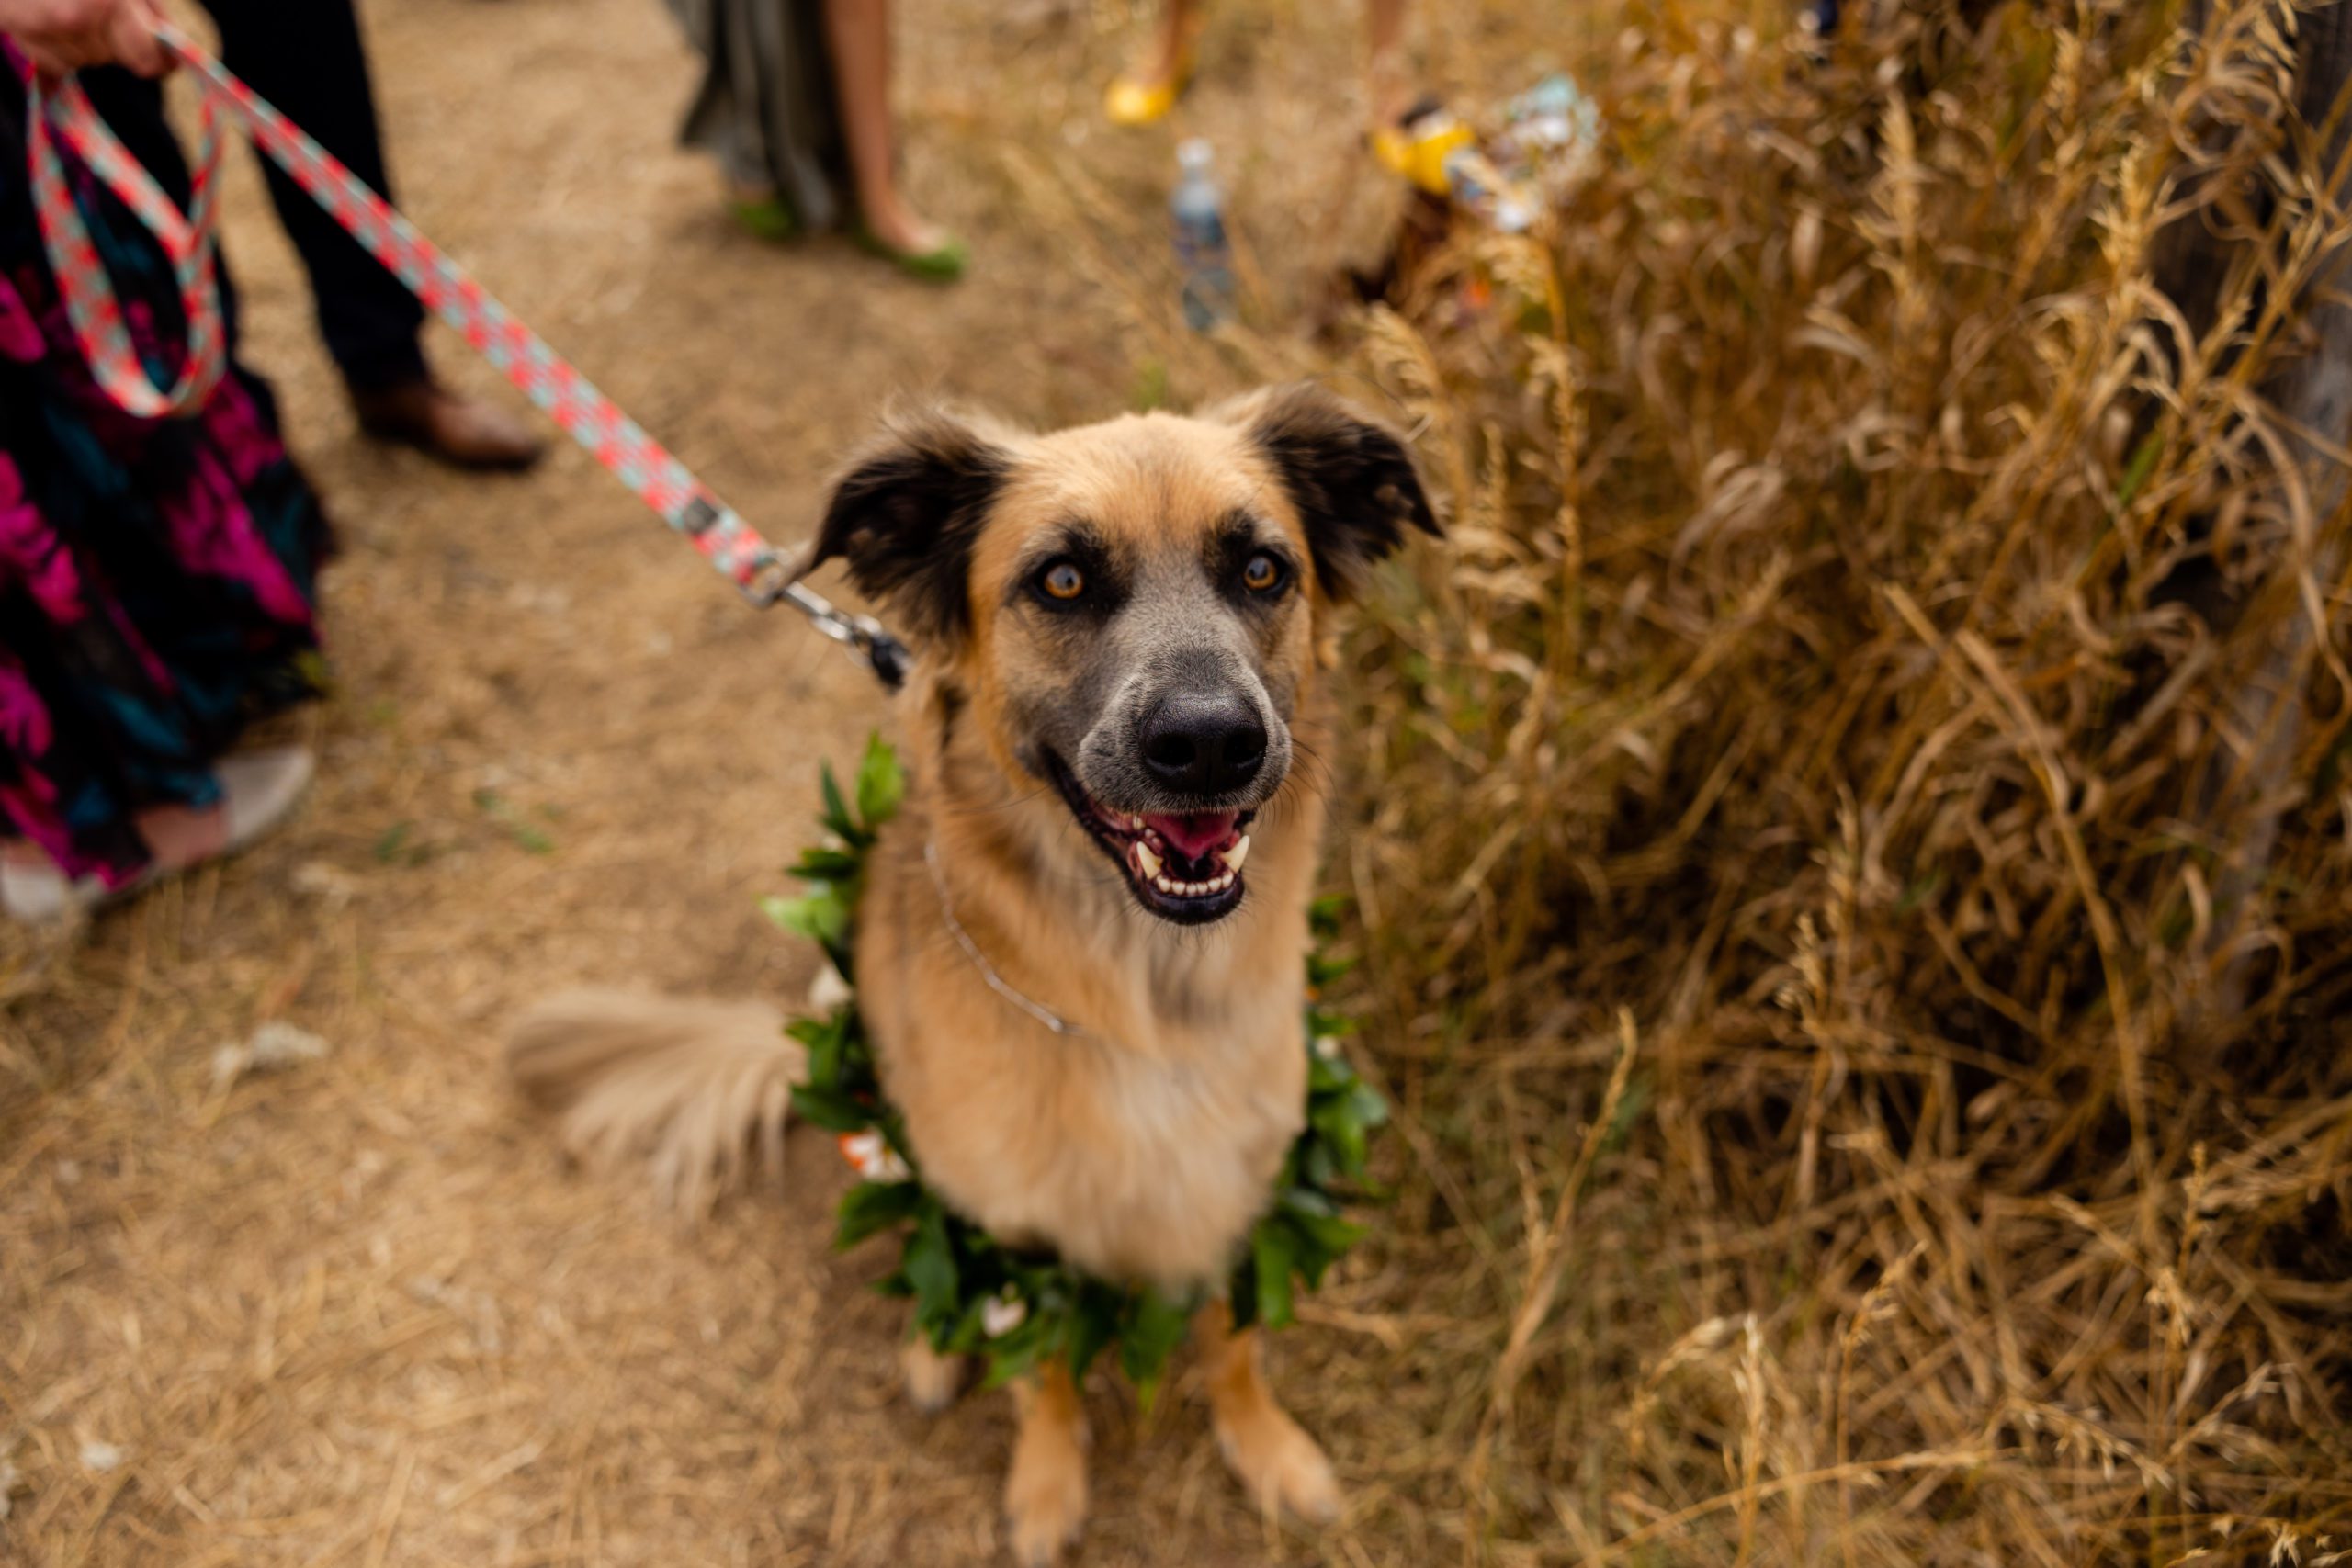 Floral collar on dog for wedding